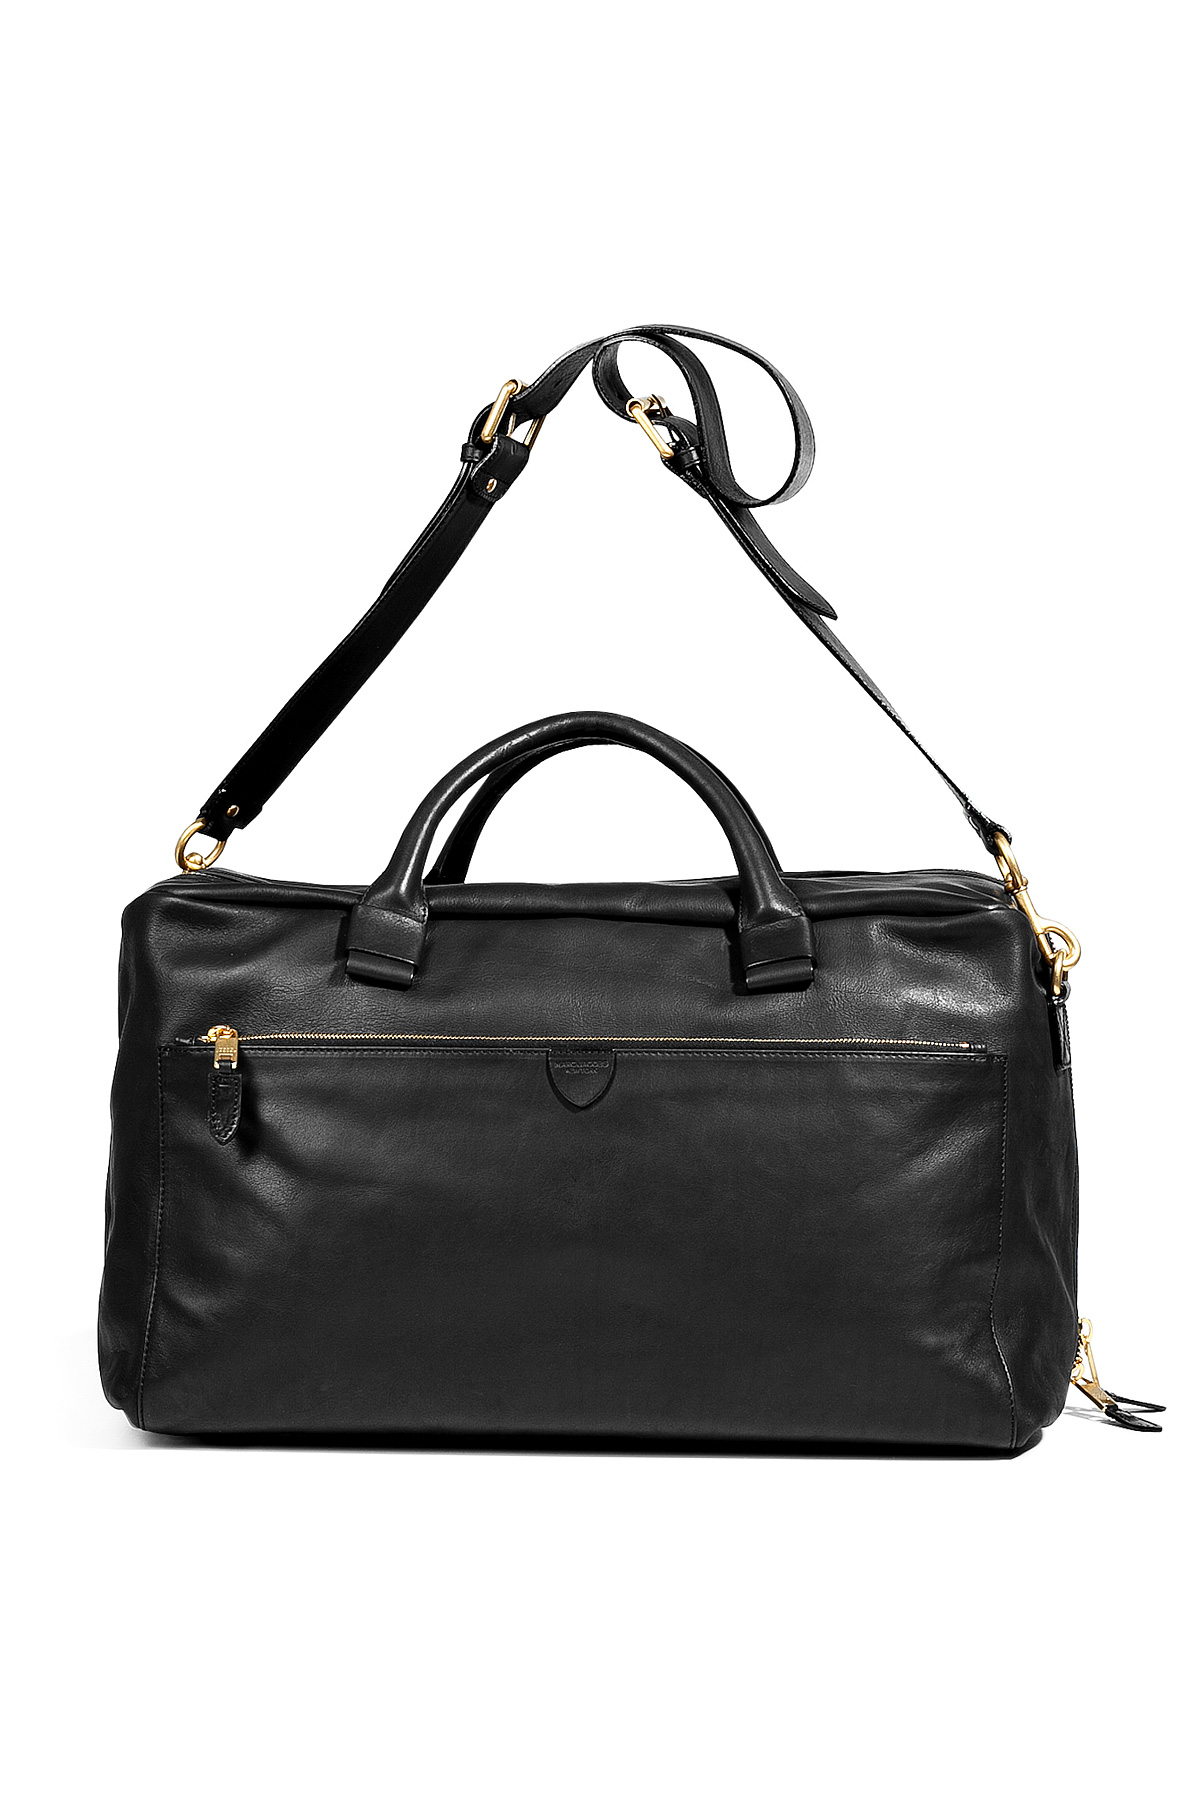 Lyst - Marc Jacobs Leather Travel Bag in Black for Men